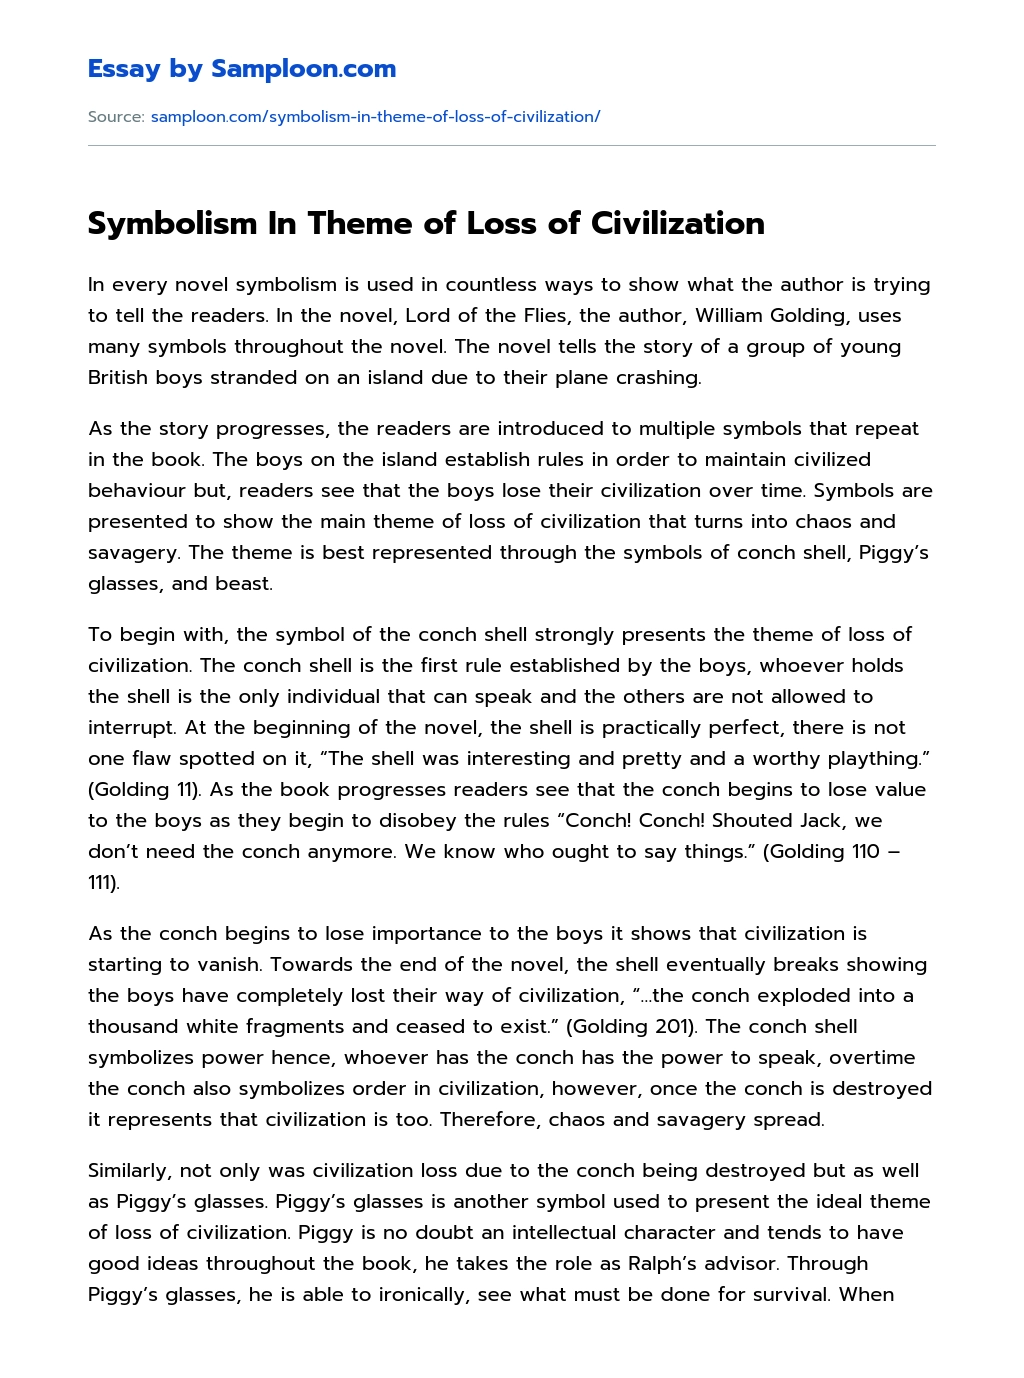 Symbolism In Theme of Loss of Civilization essay